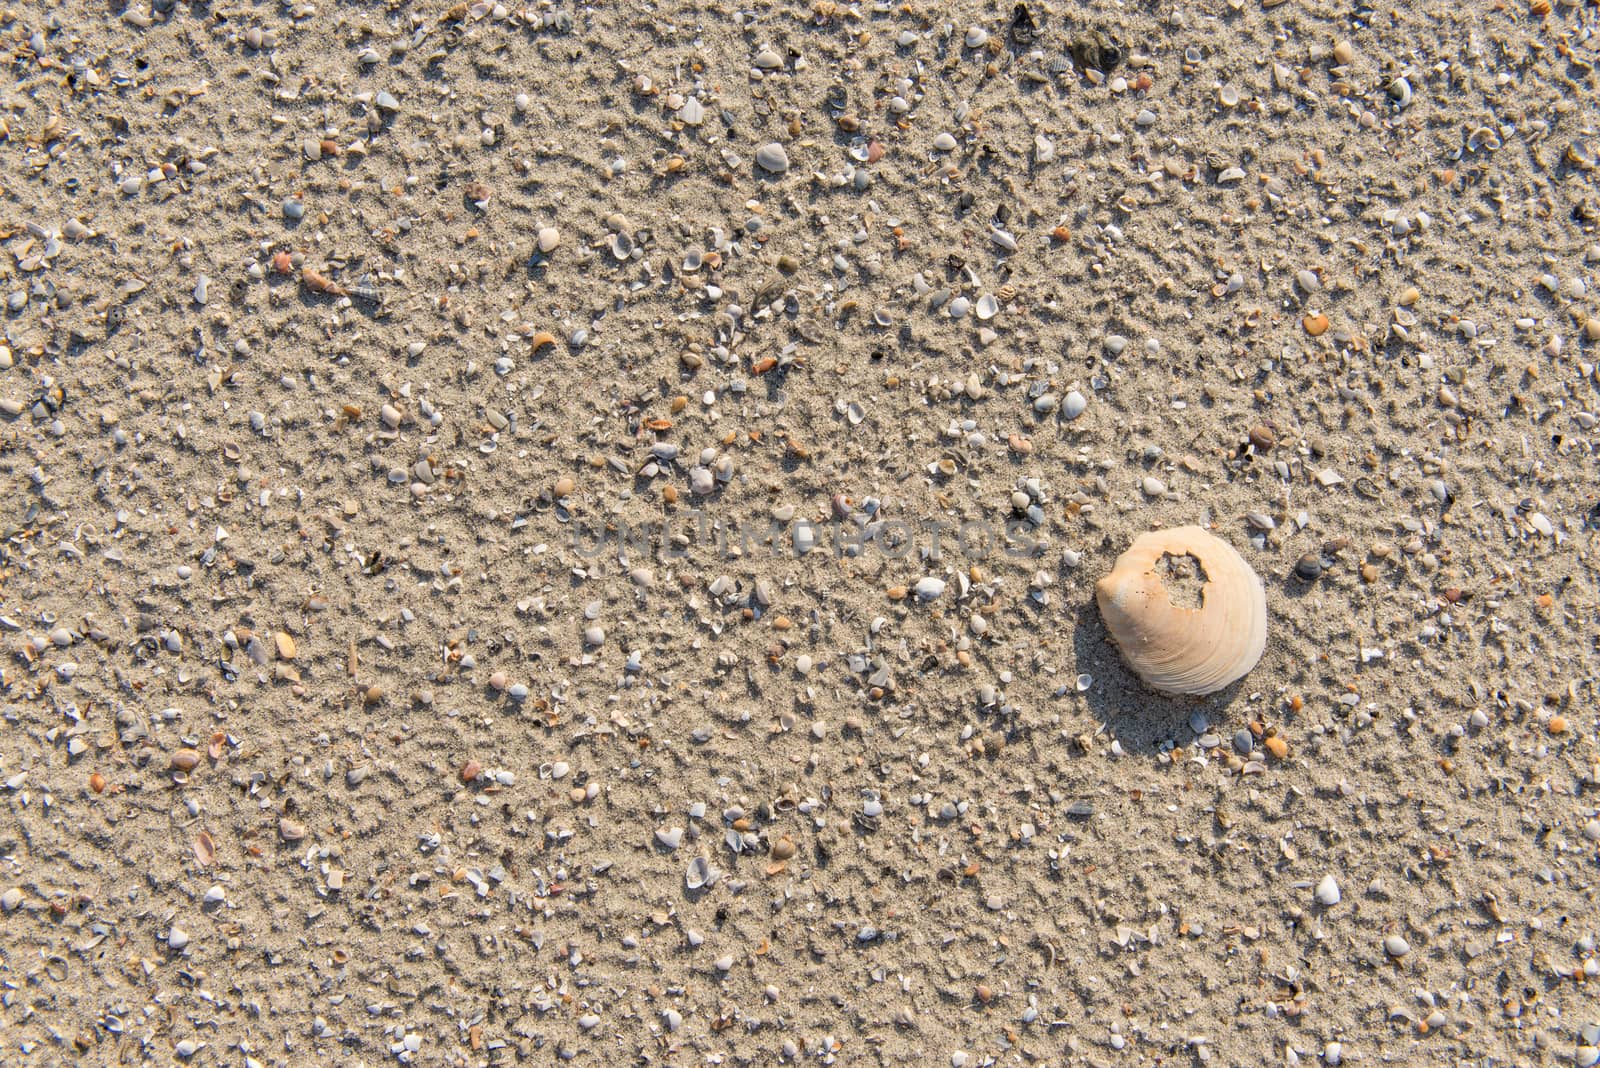 Diverse shells and sand pattern of an ocean beach.